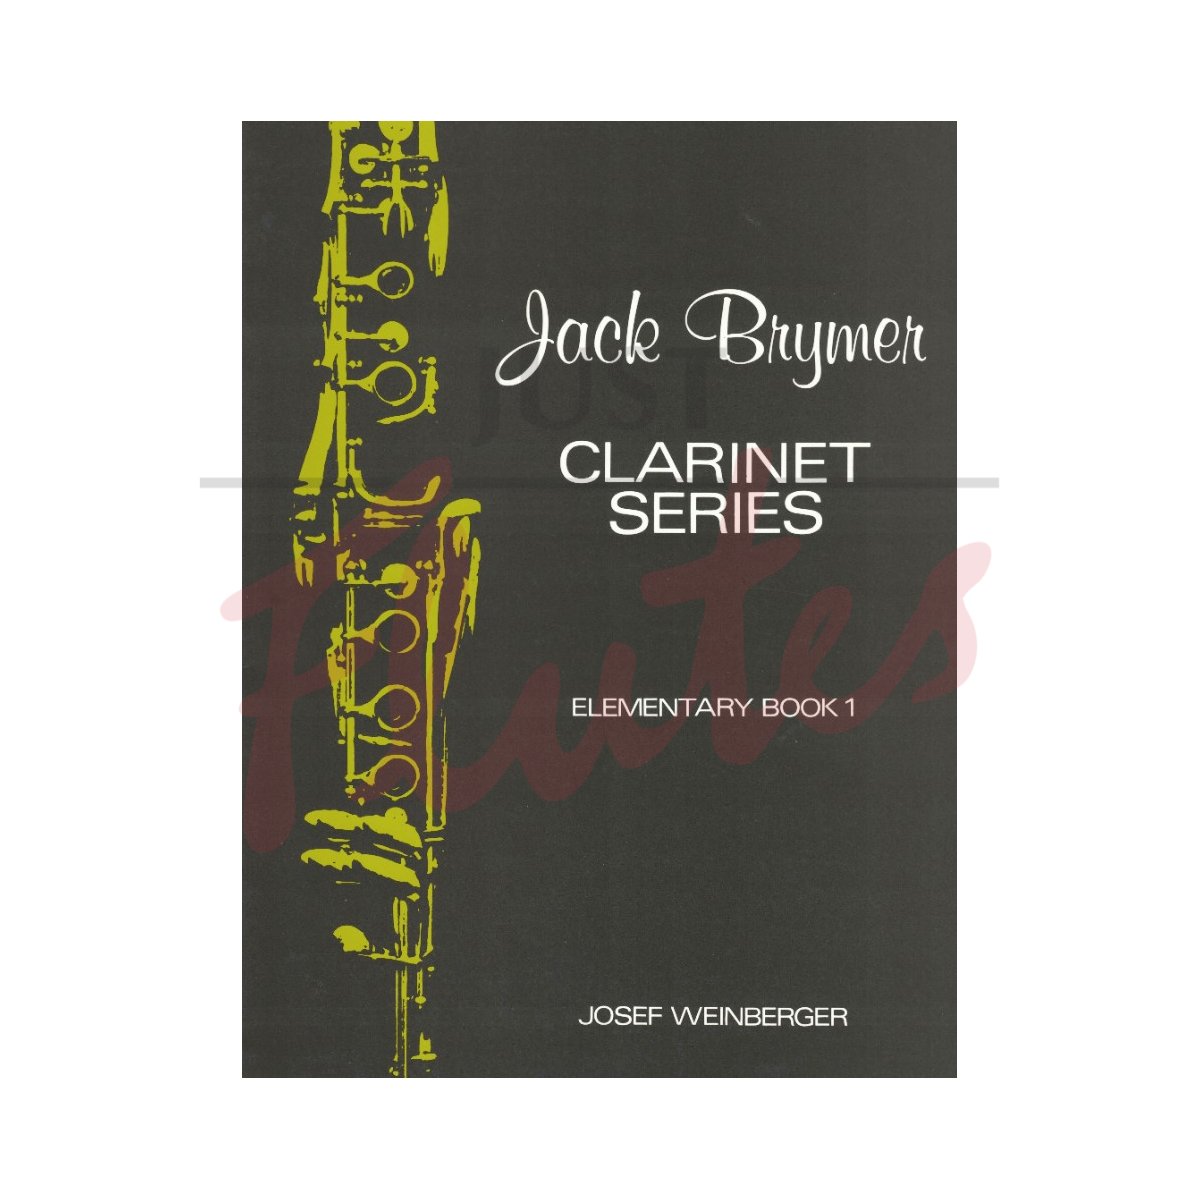 Clarinet Series Elementary Book 1